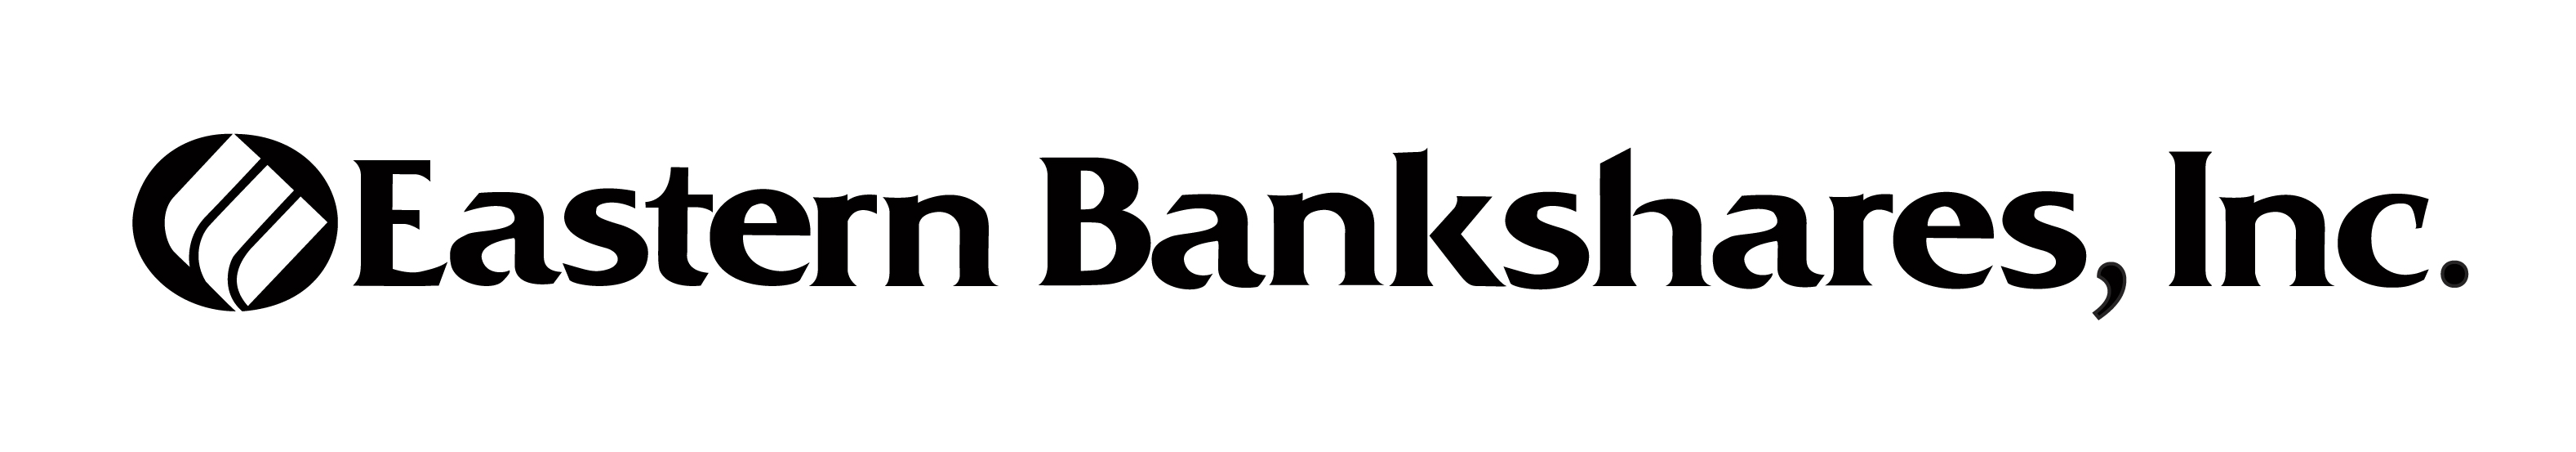 Eastern Bankshares Logo_B&W.jpg